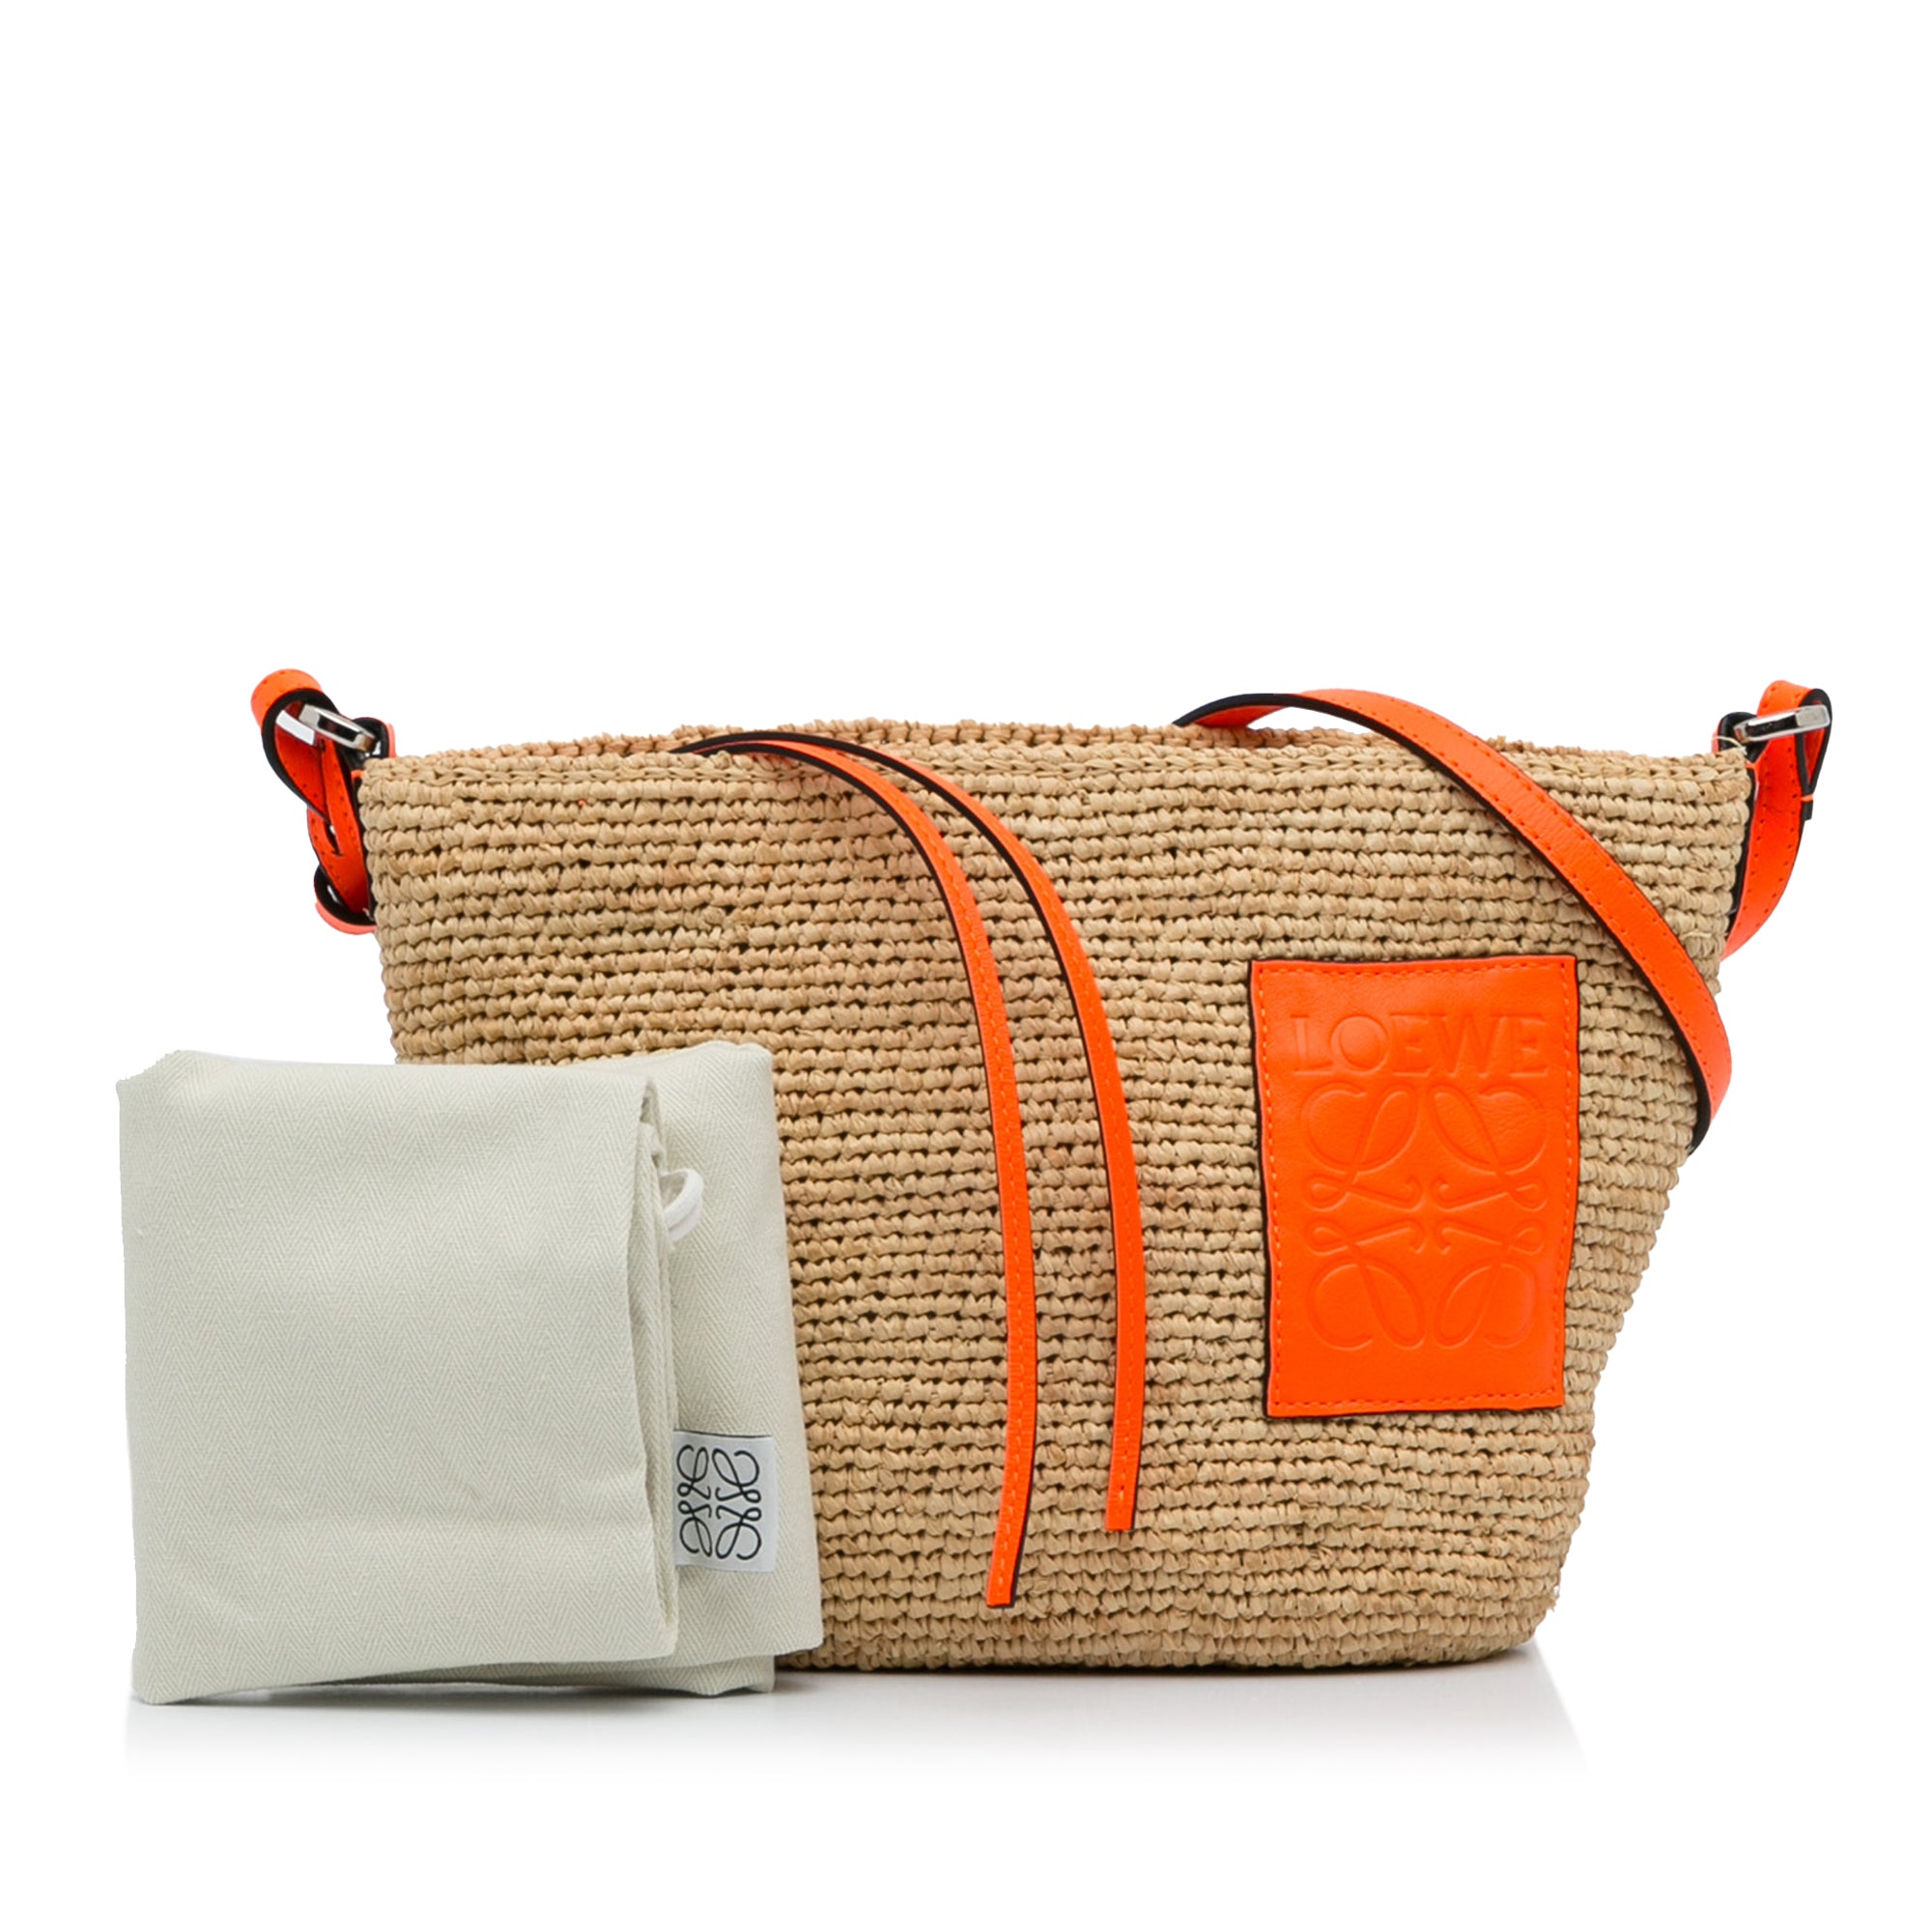 Loewe Beige/Orange Paula's Ibiza Raffia and Leather Crossbody Bag Loewe